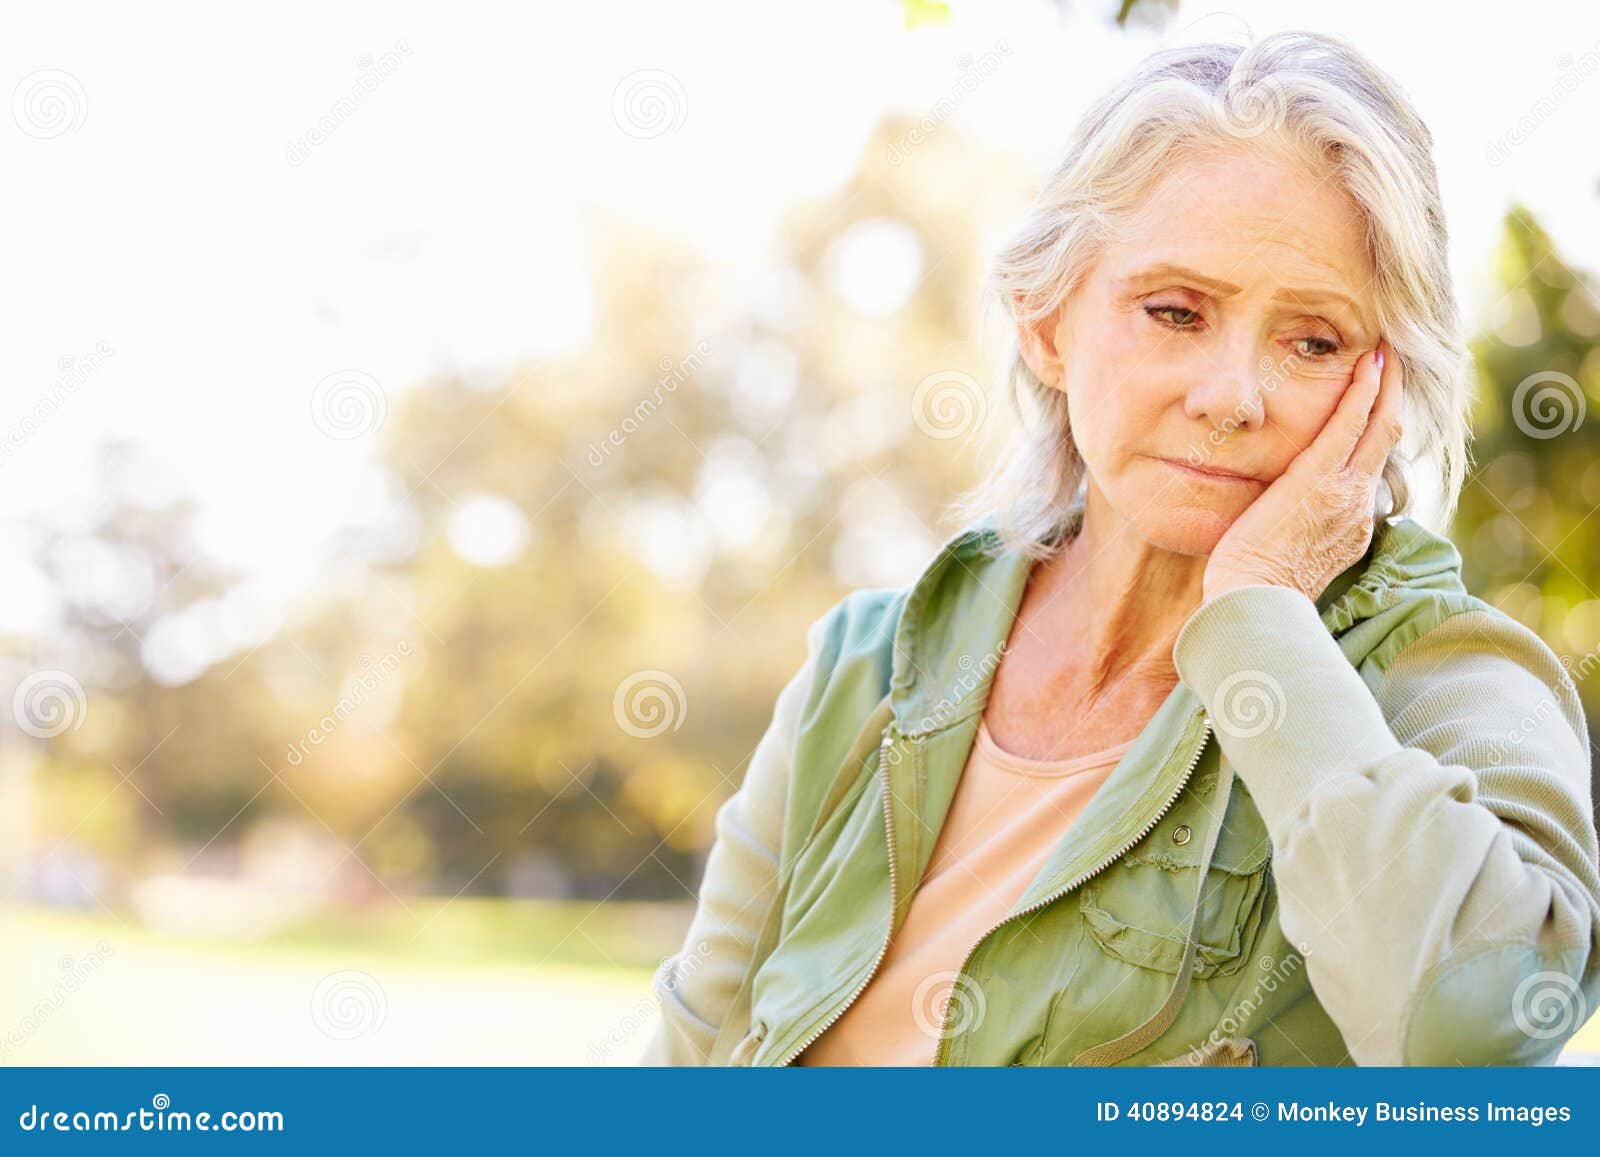 depressed senior woman sitting outside